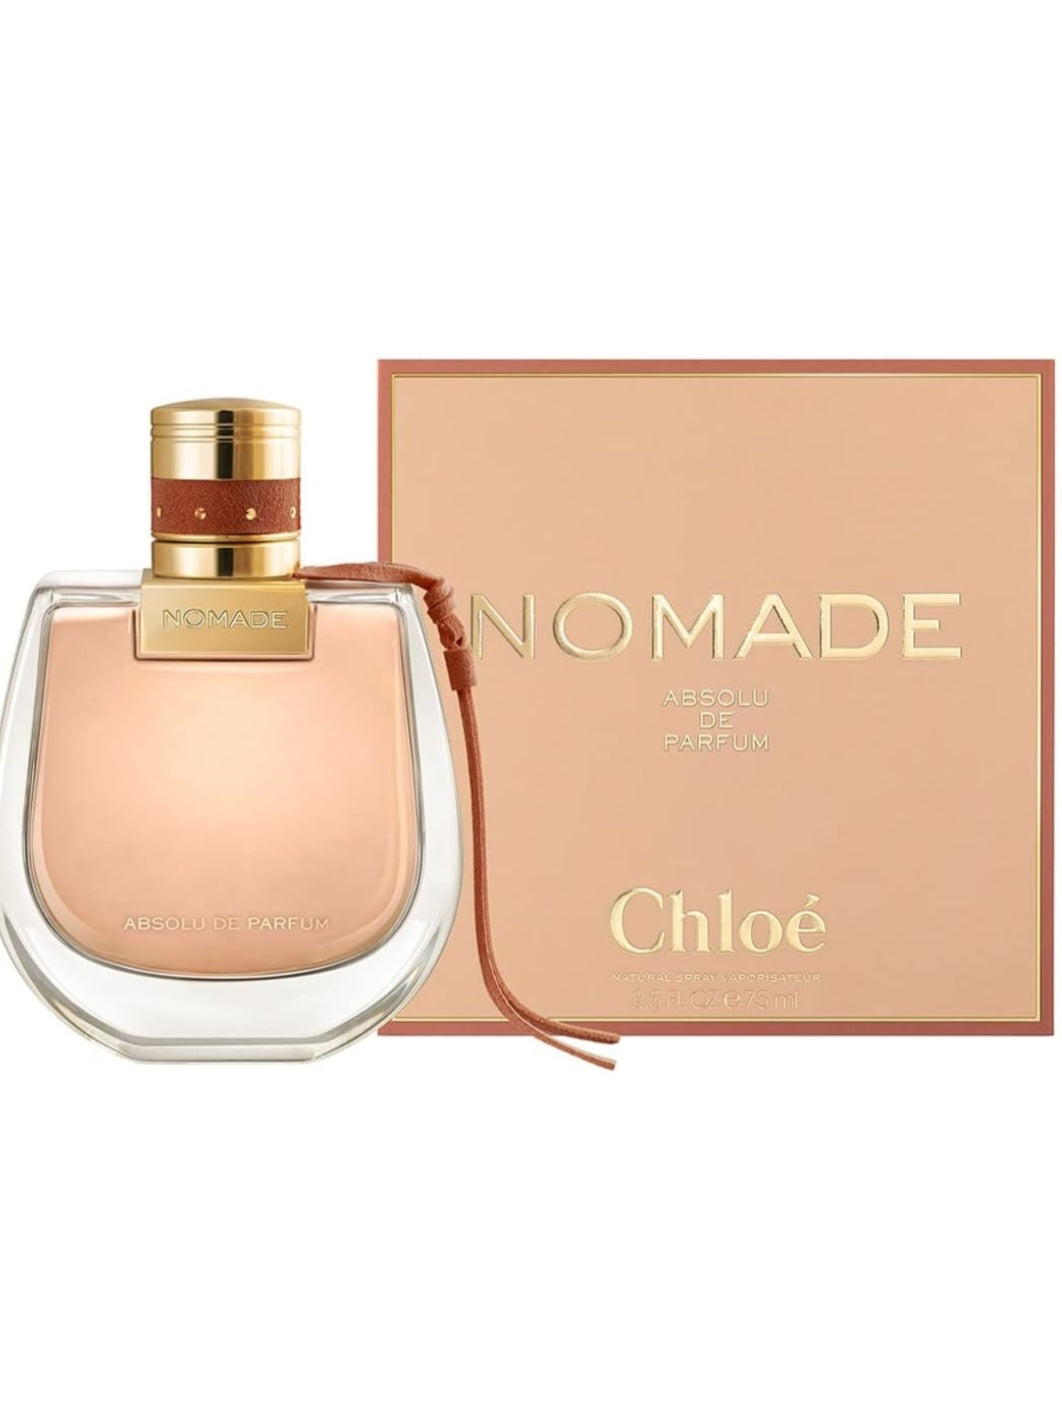 Chloe Nomade Absolu Eau de Parfum, 75ml